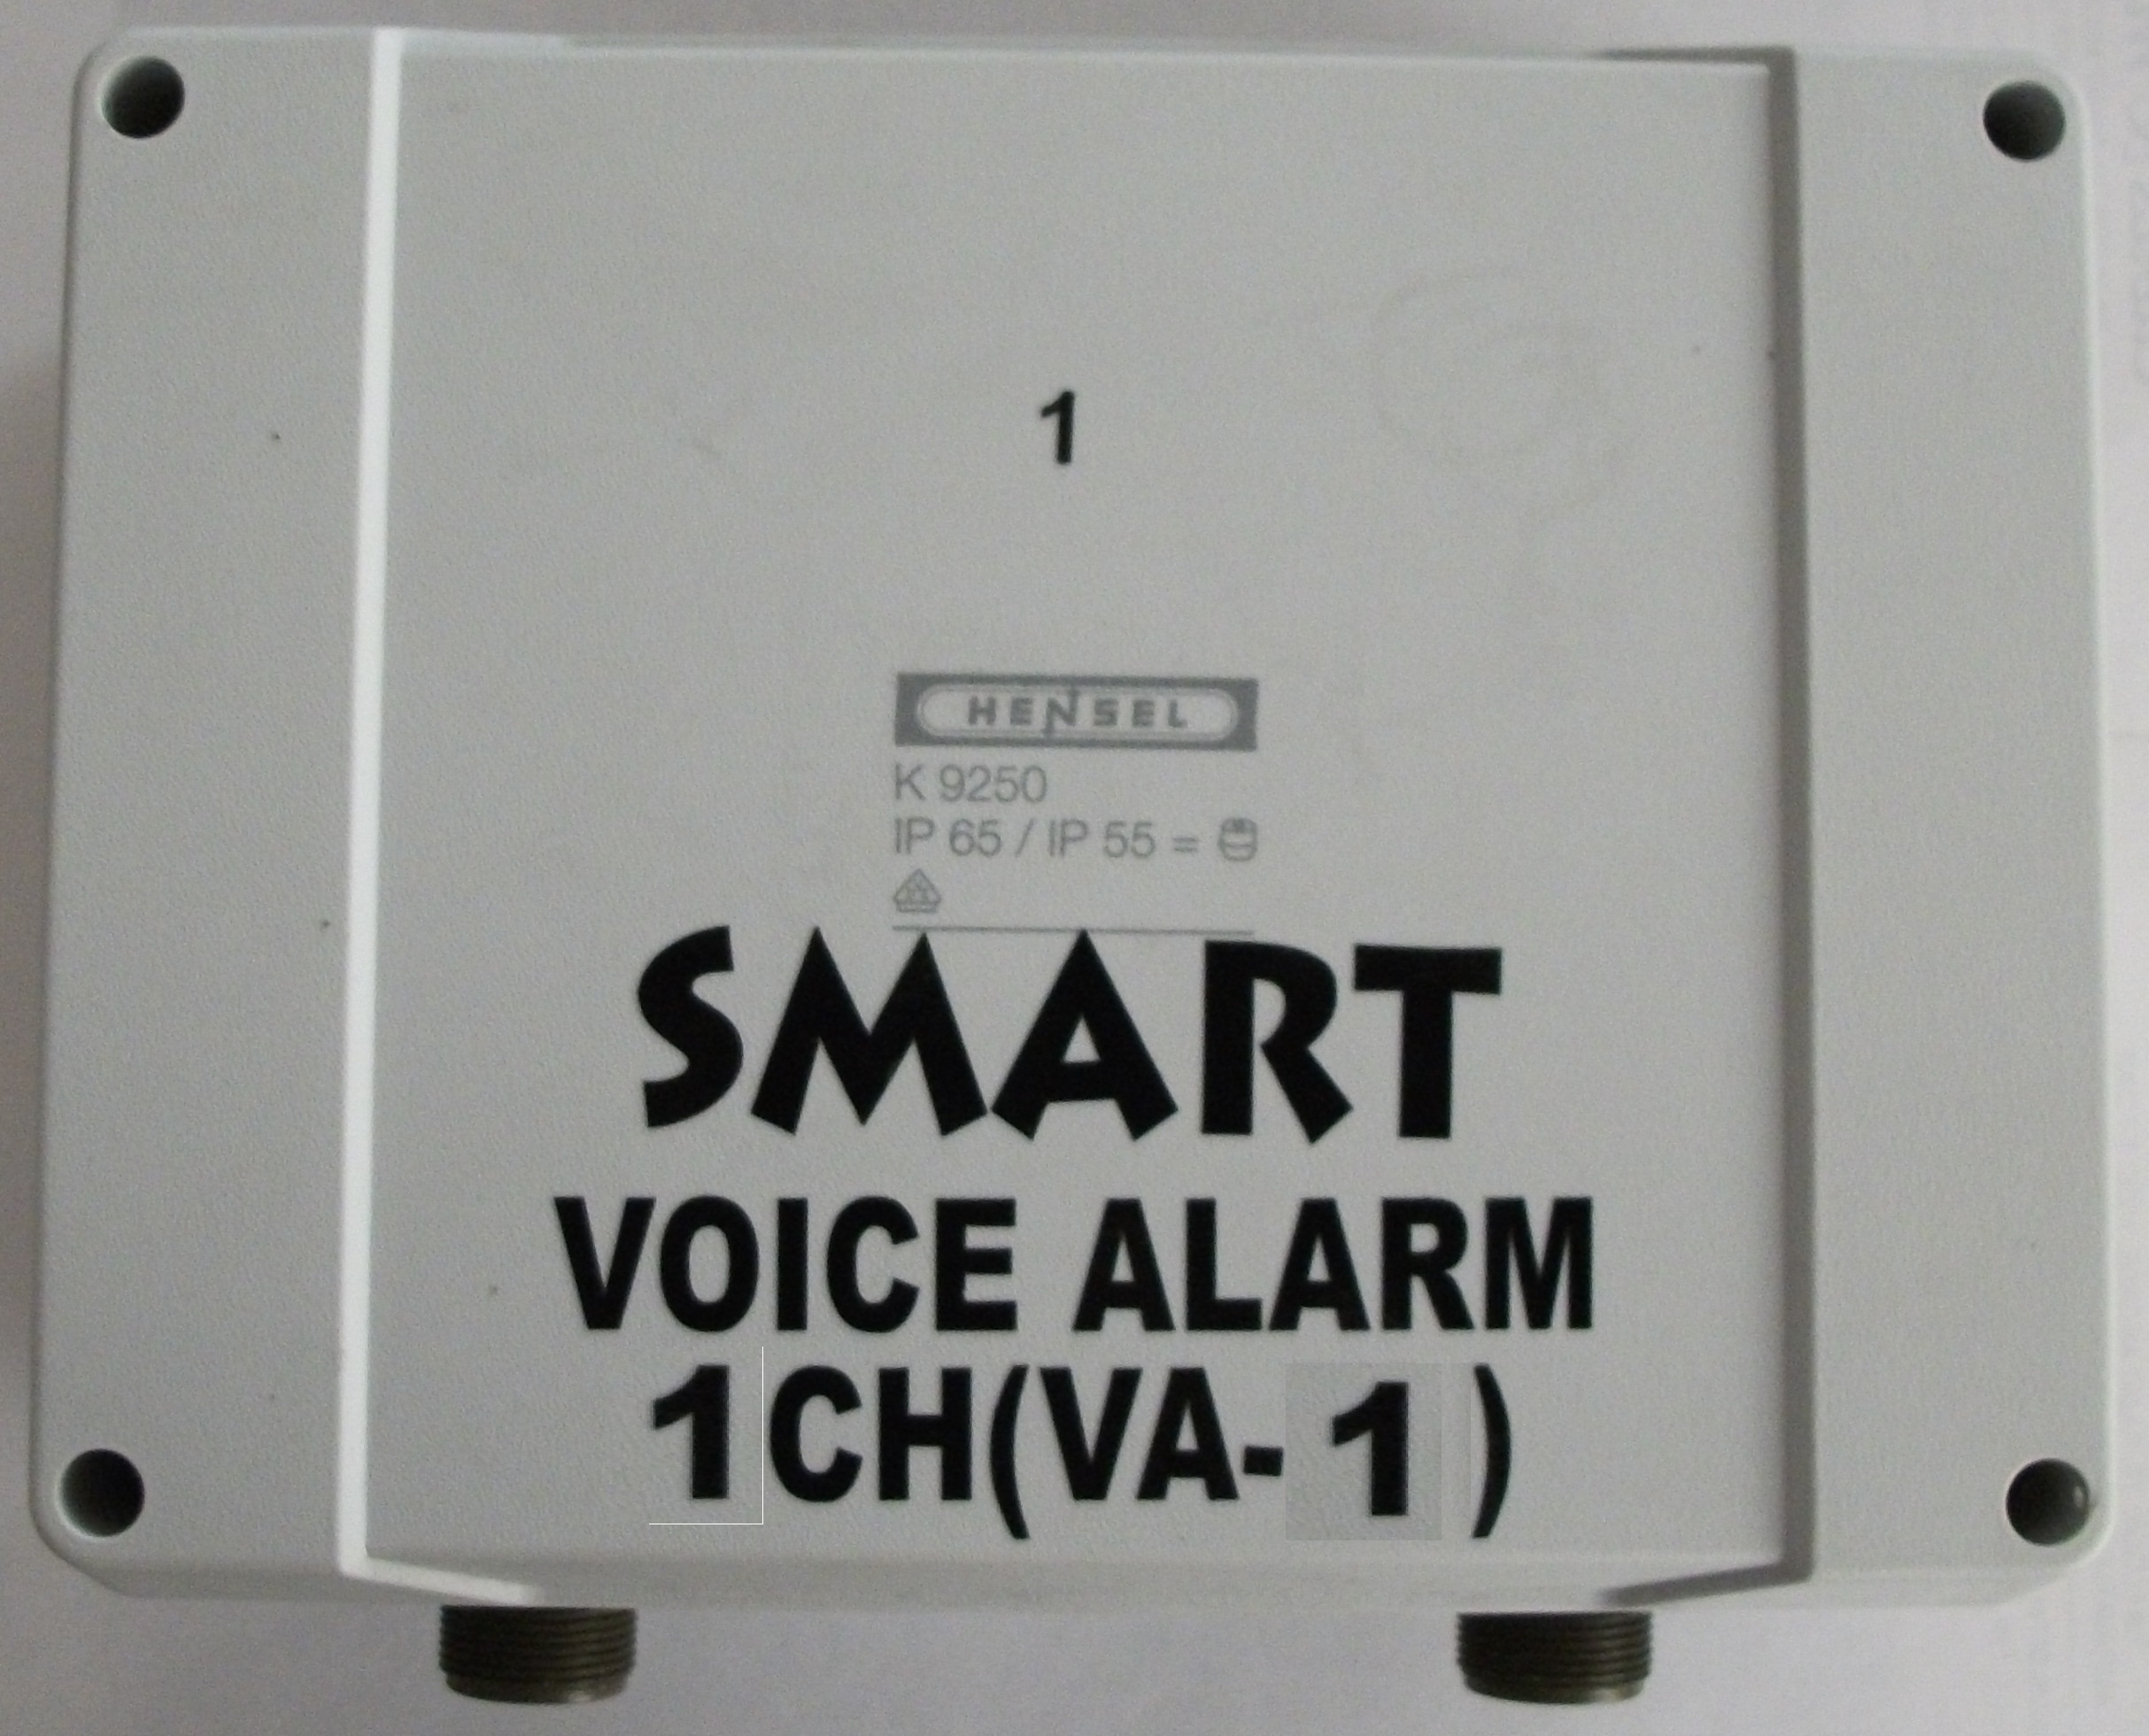 Voice Alarm,Voice Alarm System